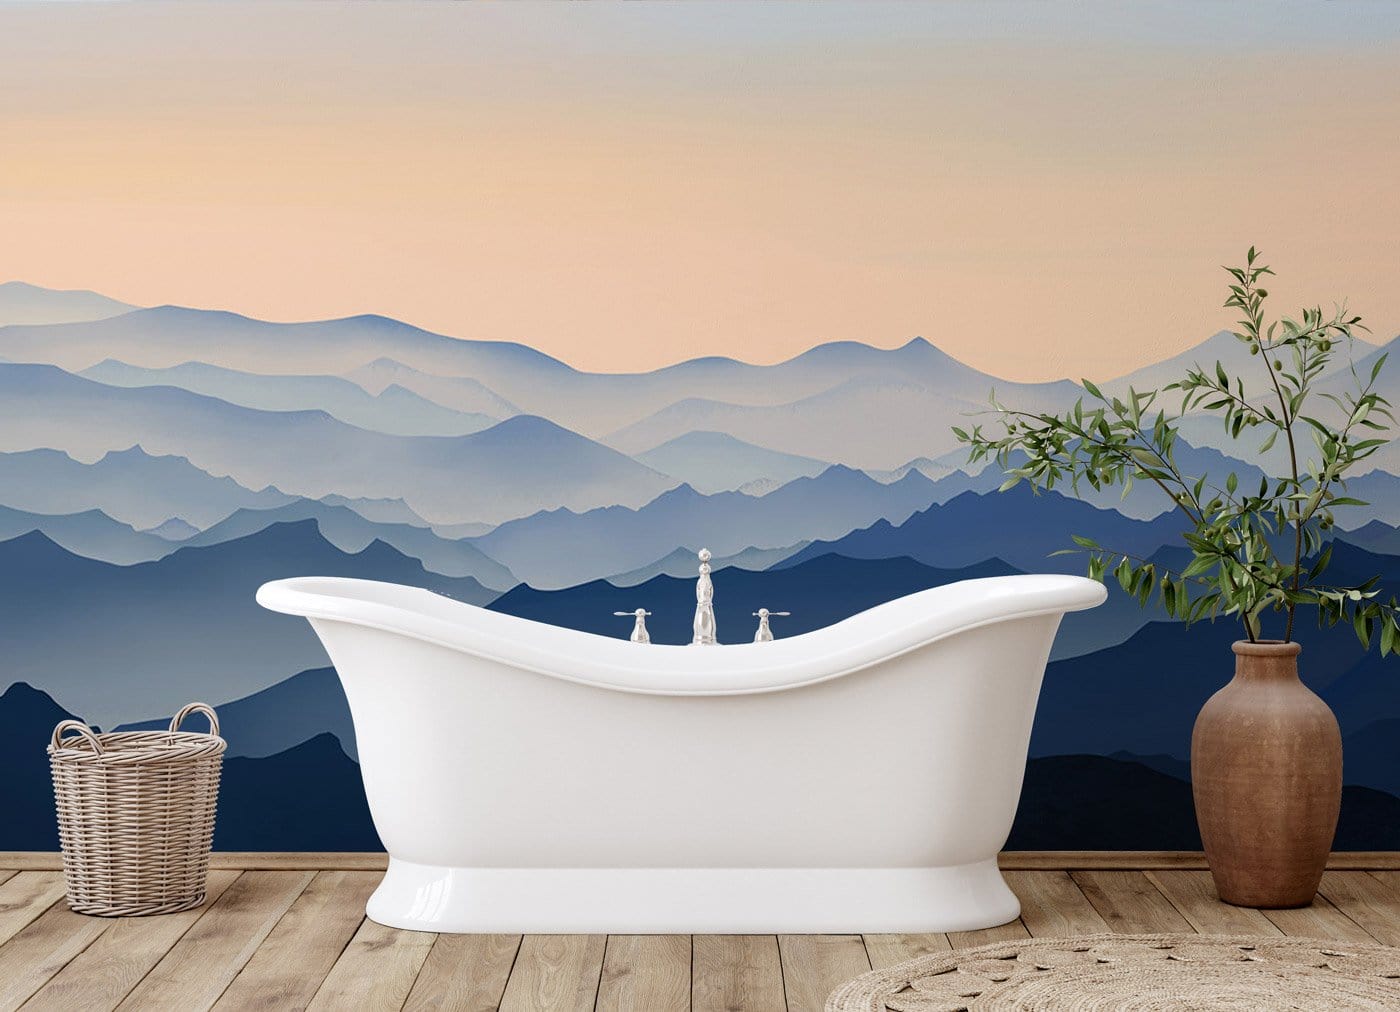 Bathroom wall murals with a foggy mountain backdrop